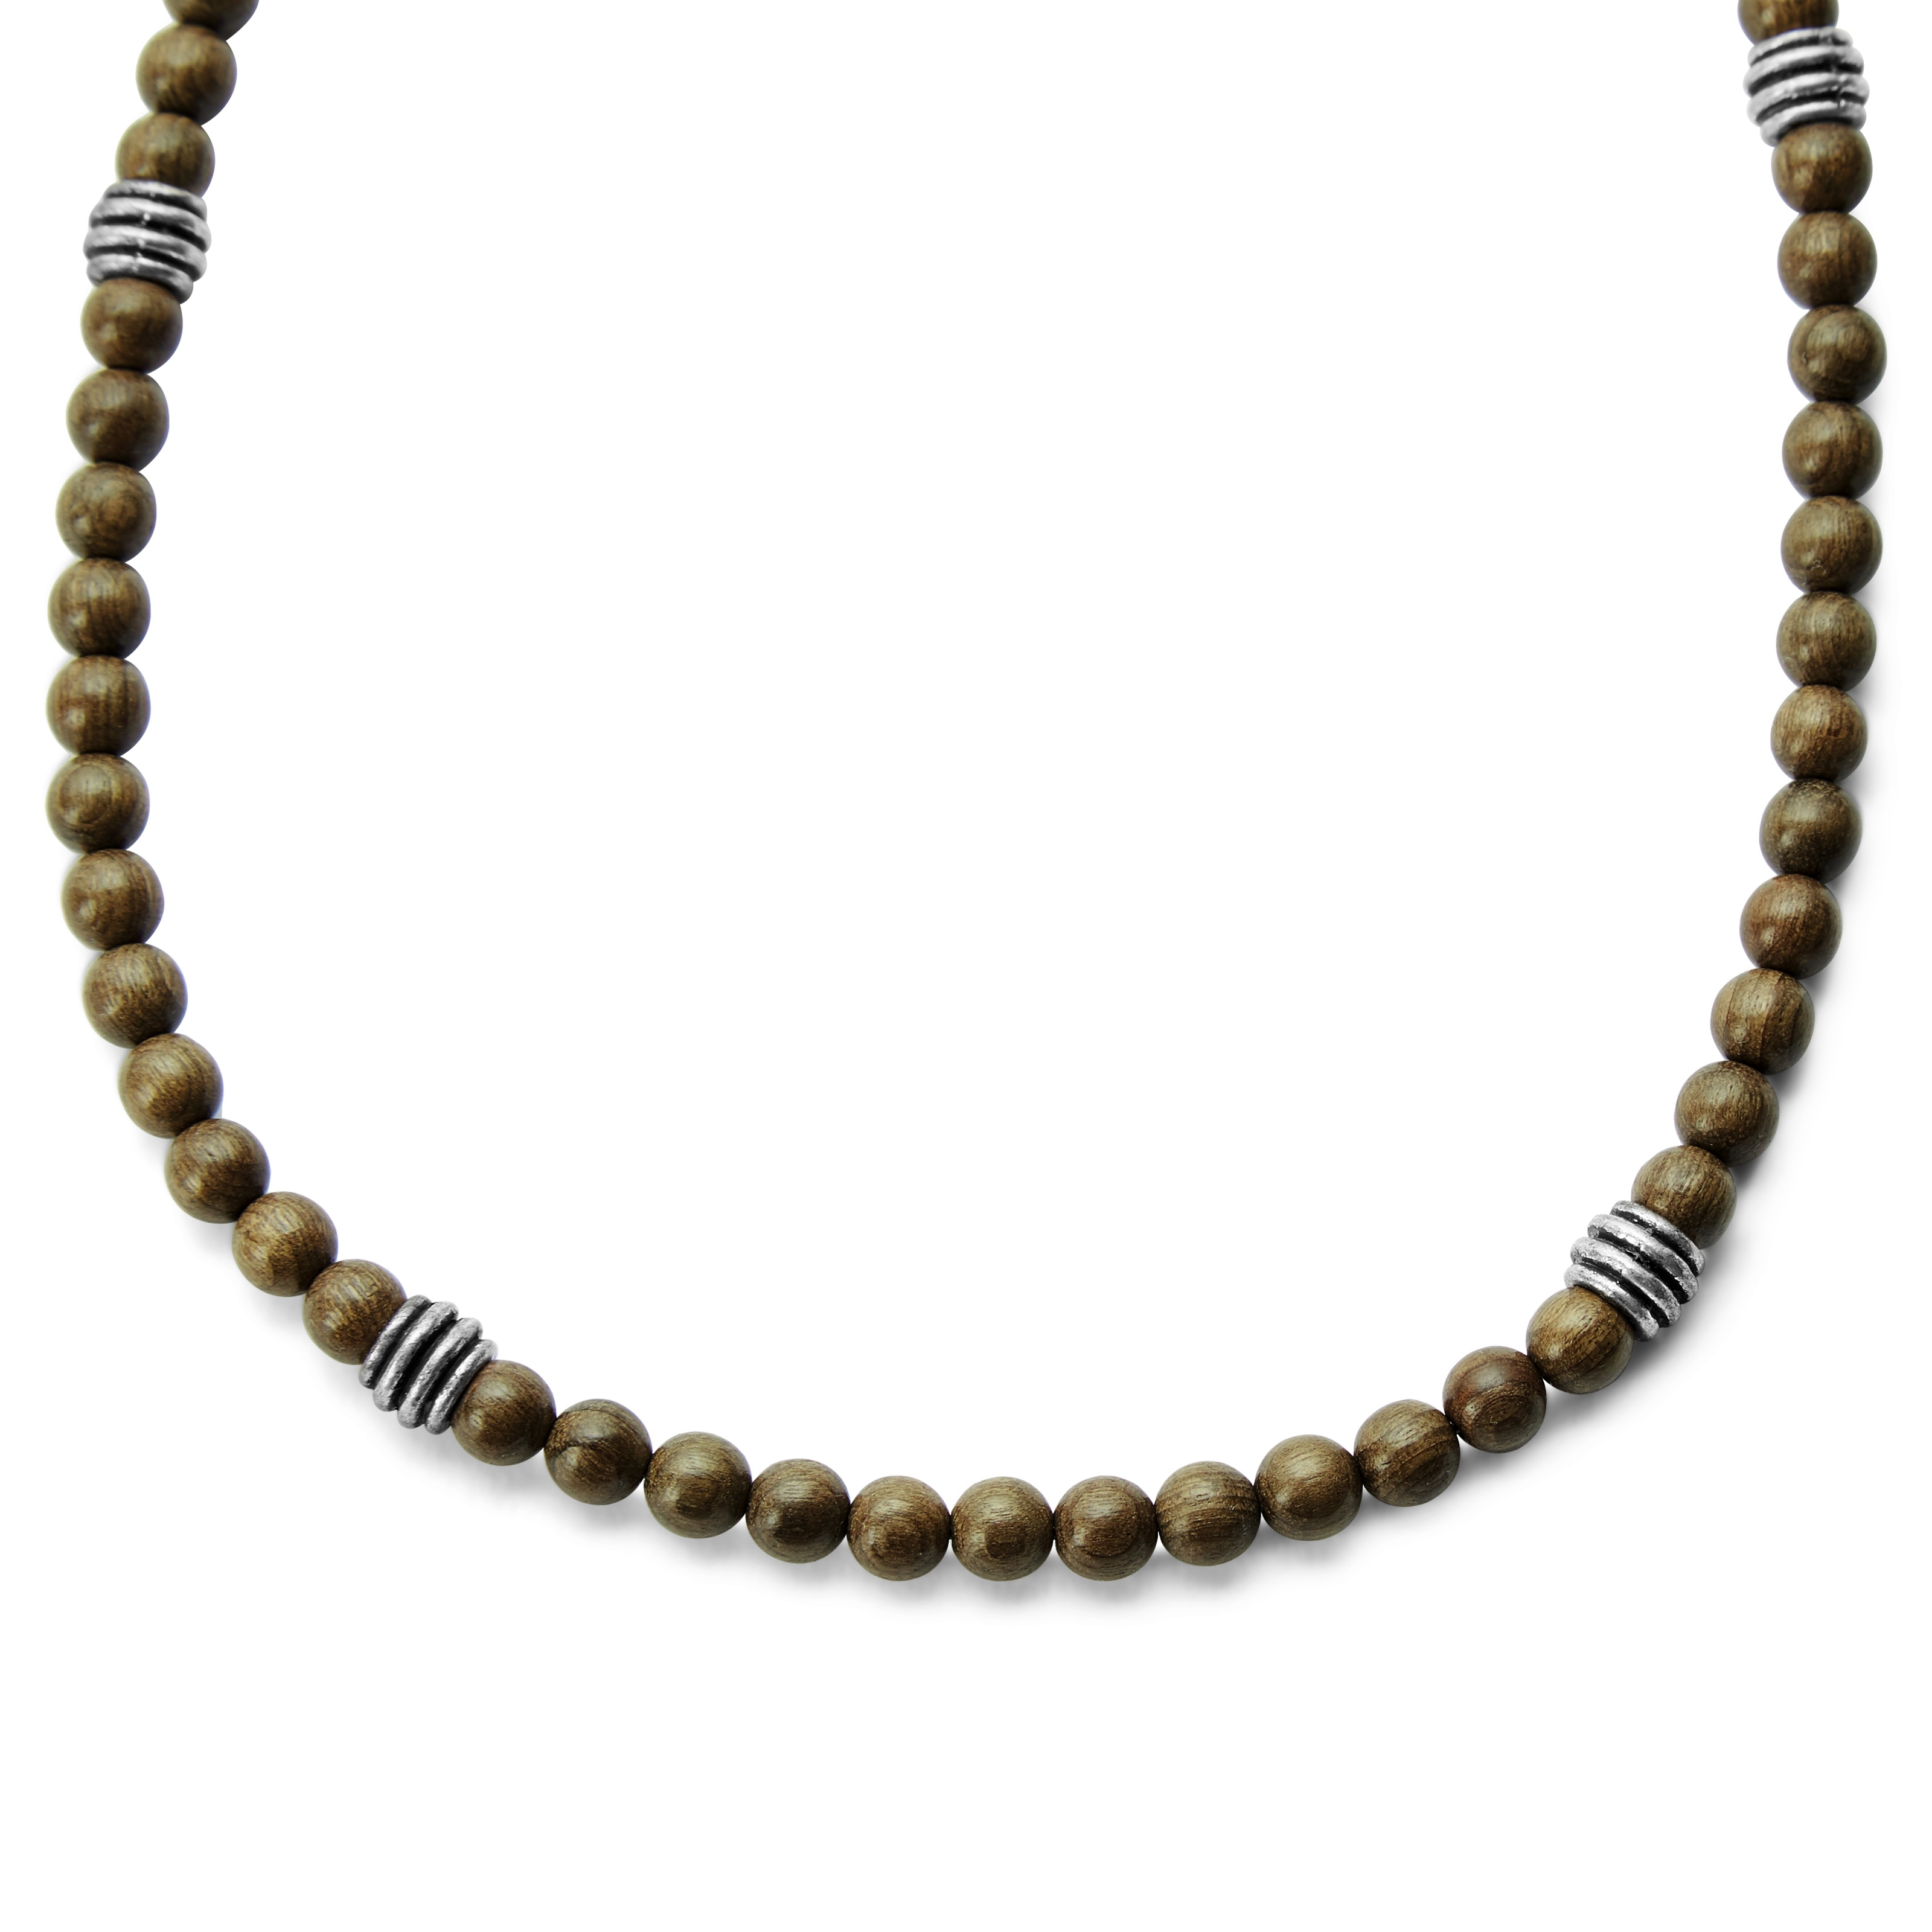 Jewelry Volt Men Women Wood Beads Necklace with Tree of Life Symbol Pendant  - Beige Beads | Amazon.com